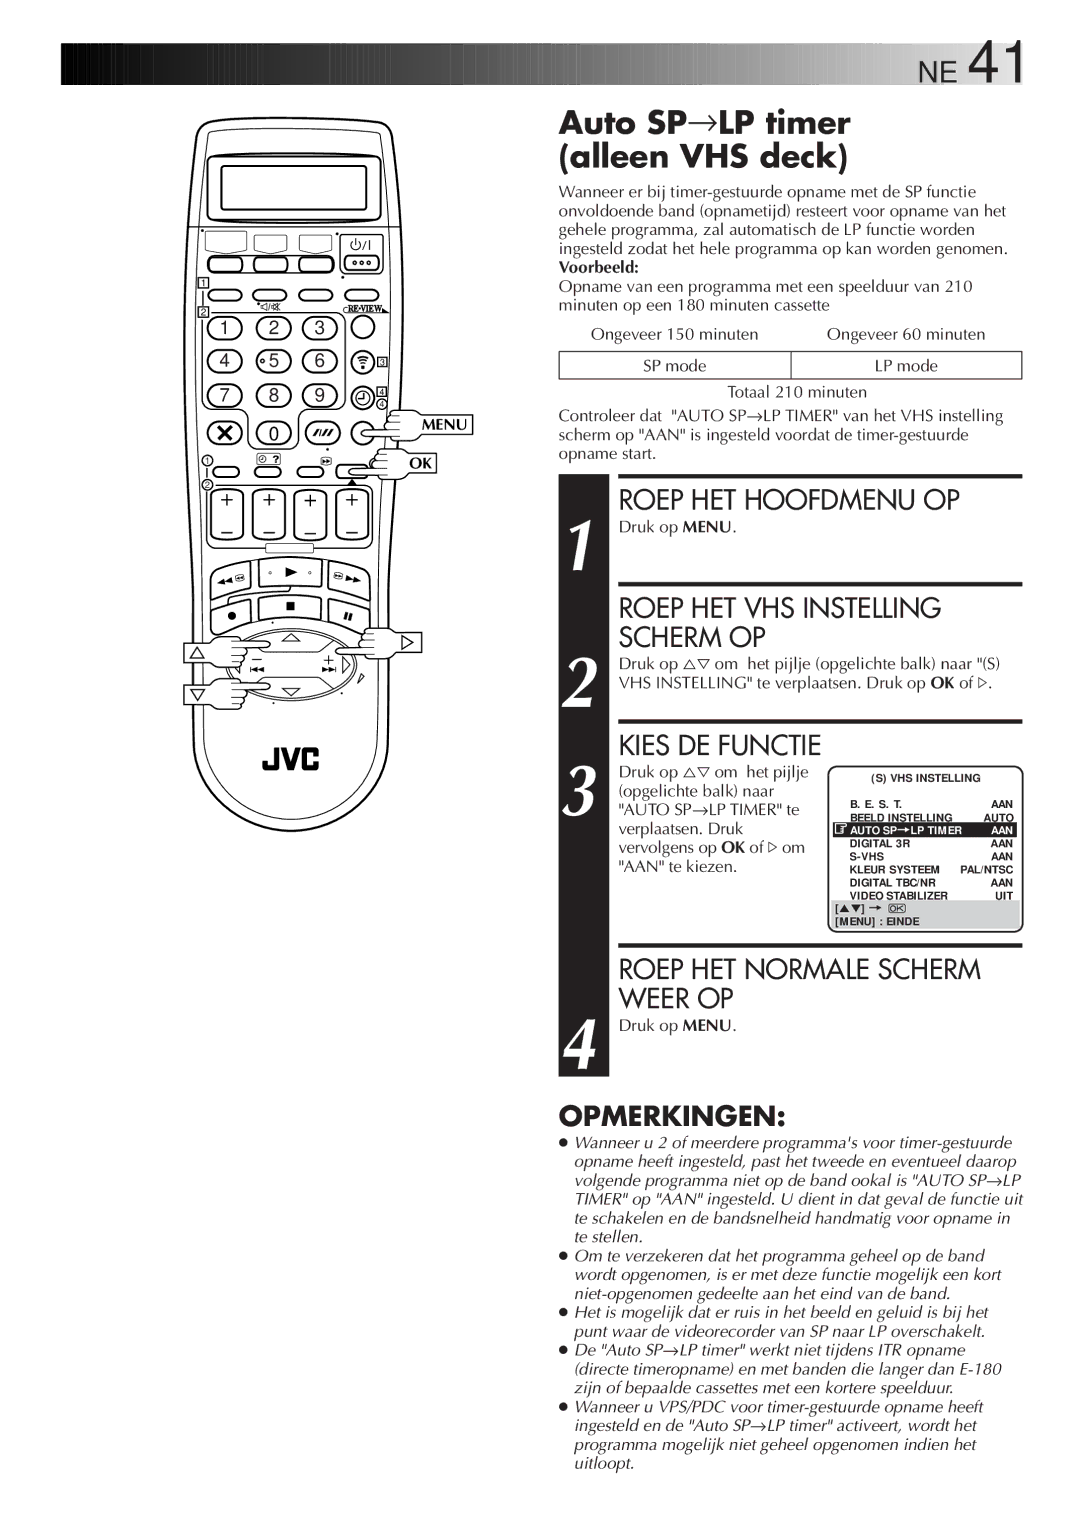 JVC HR-DVS2EU manual Auto SP→LP timer alleen VHS deck, Voorbeeld 